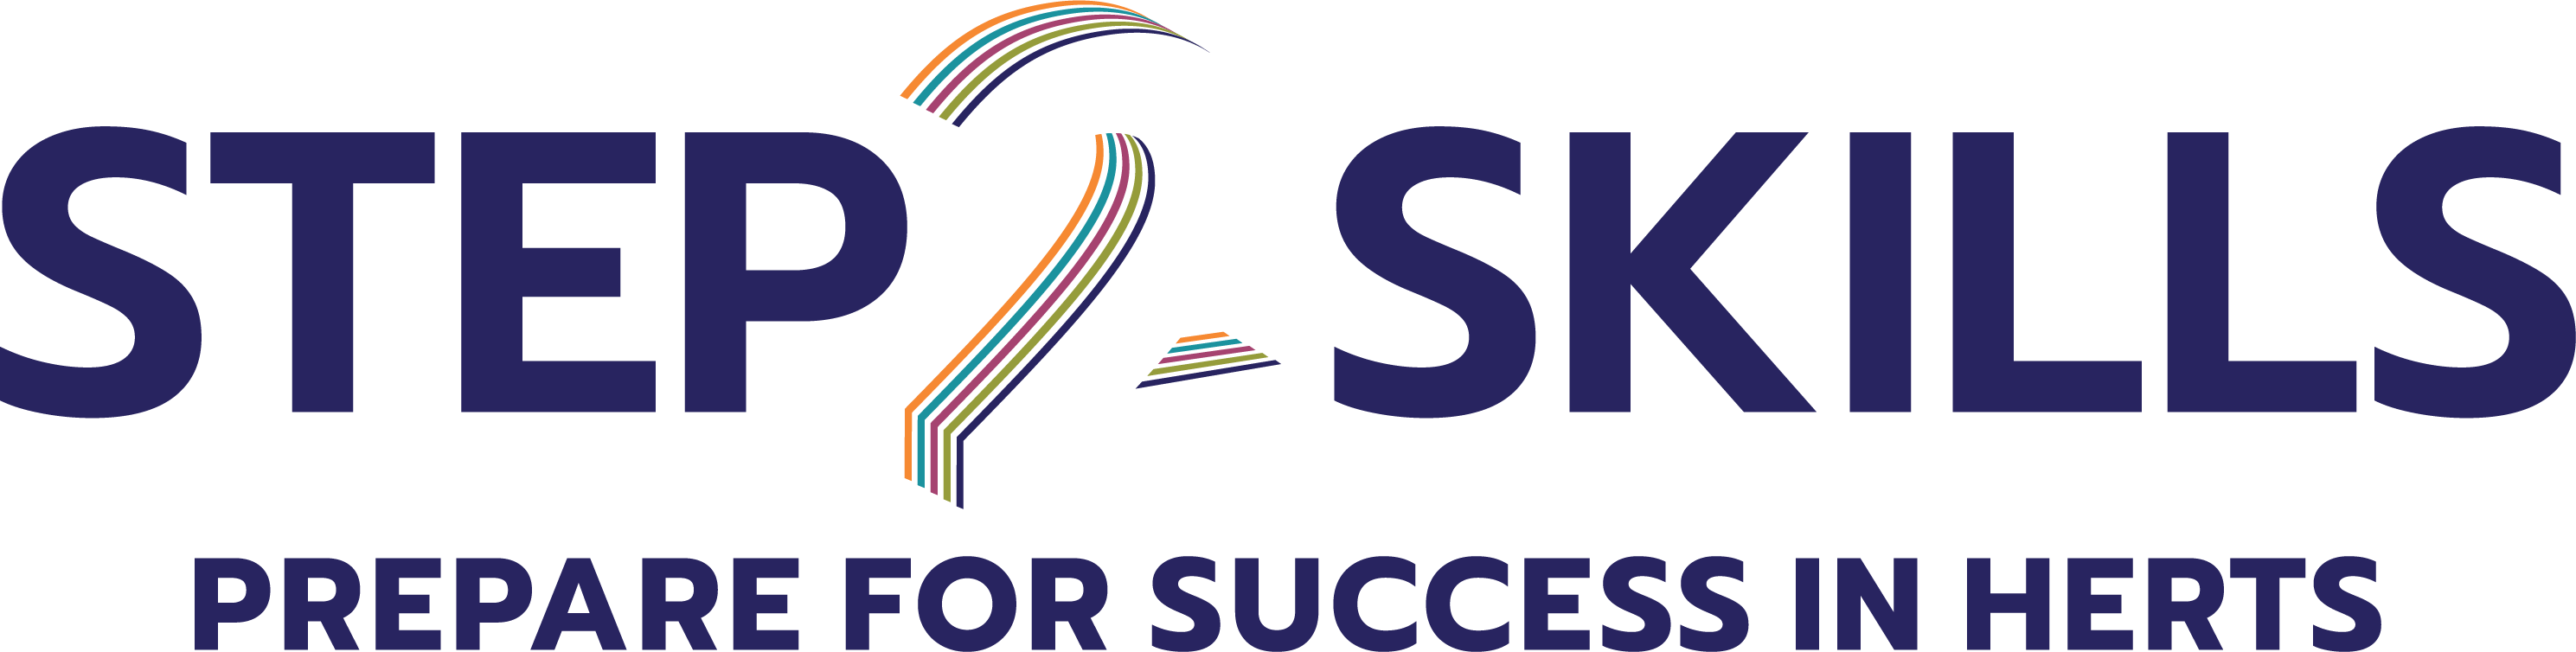 Step2skill logo